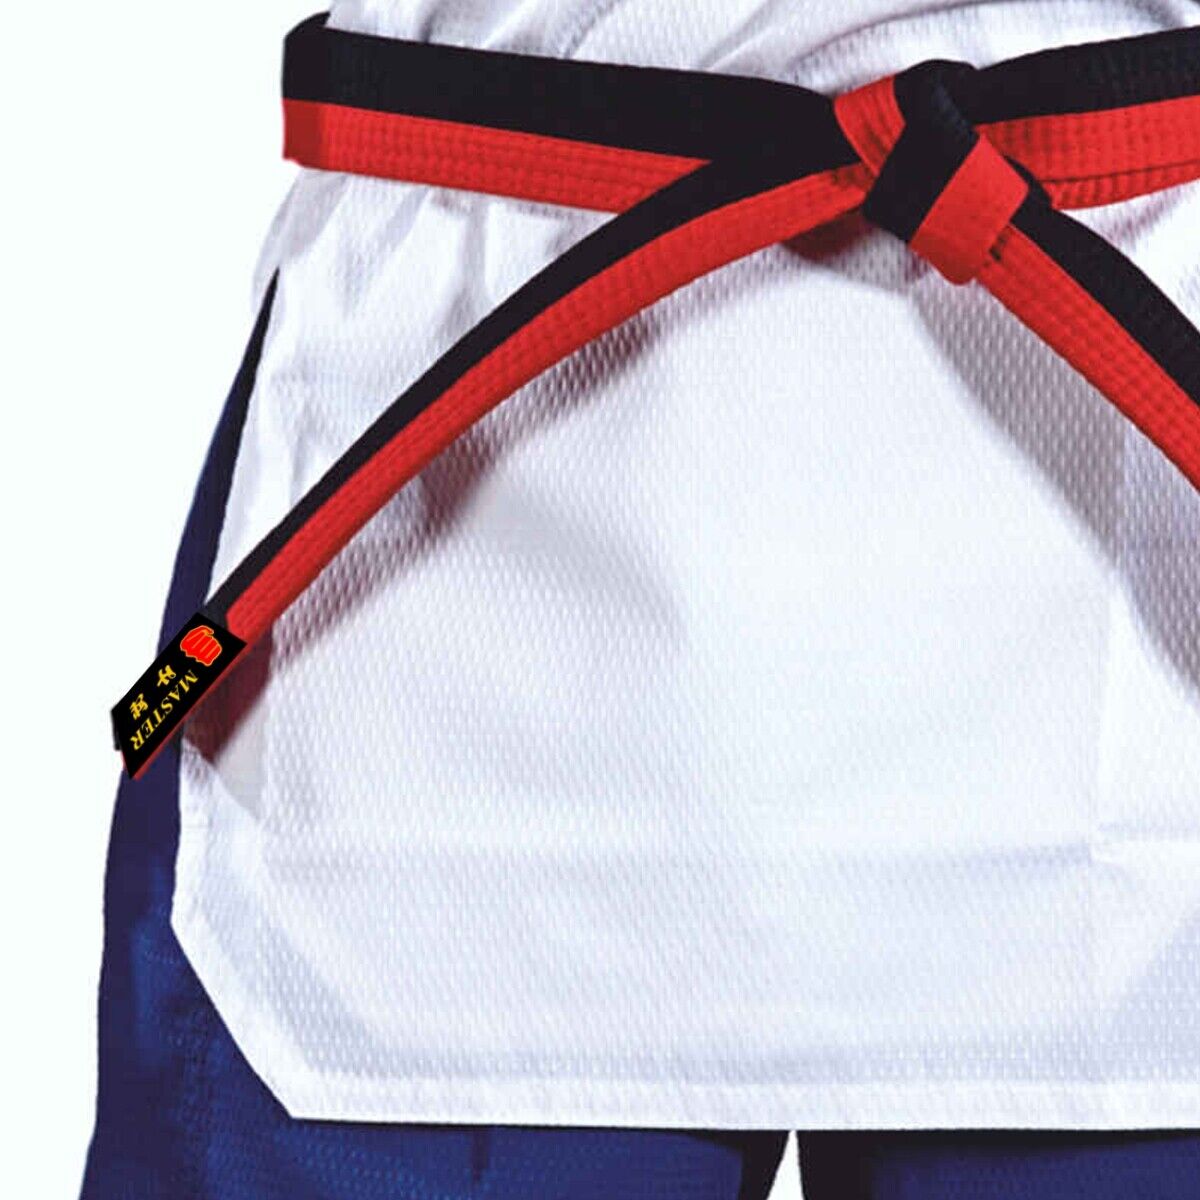 Master Taekwondo Poom Belt Black Red